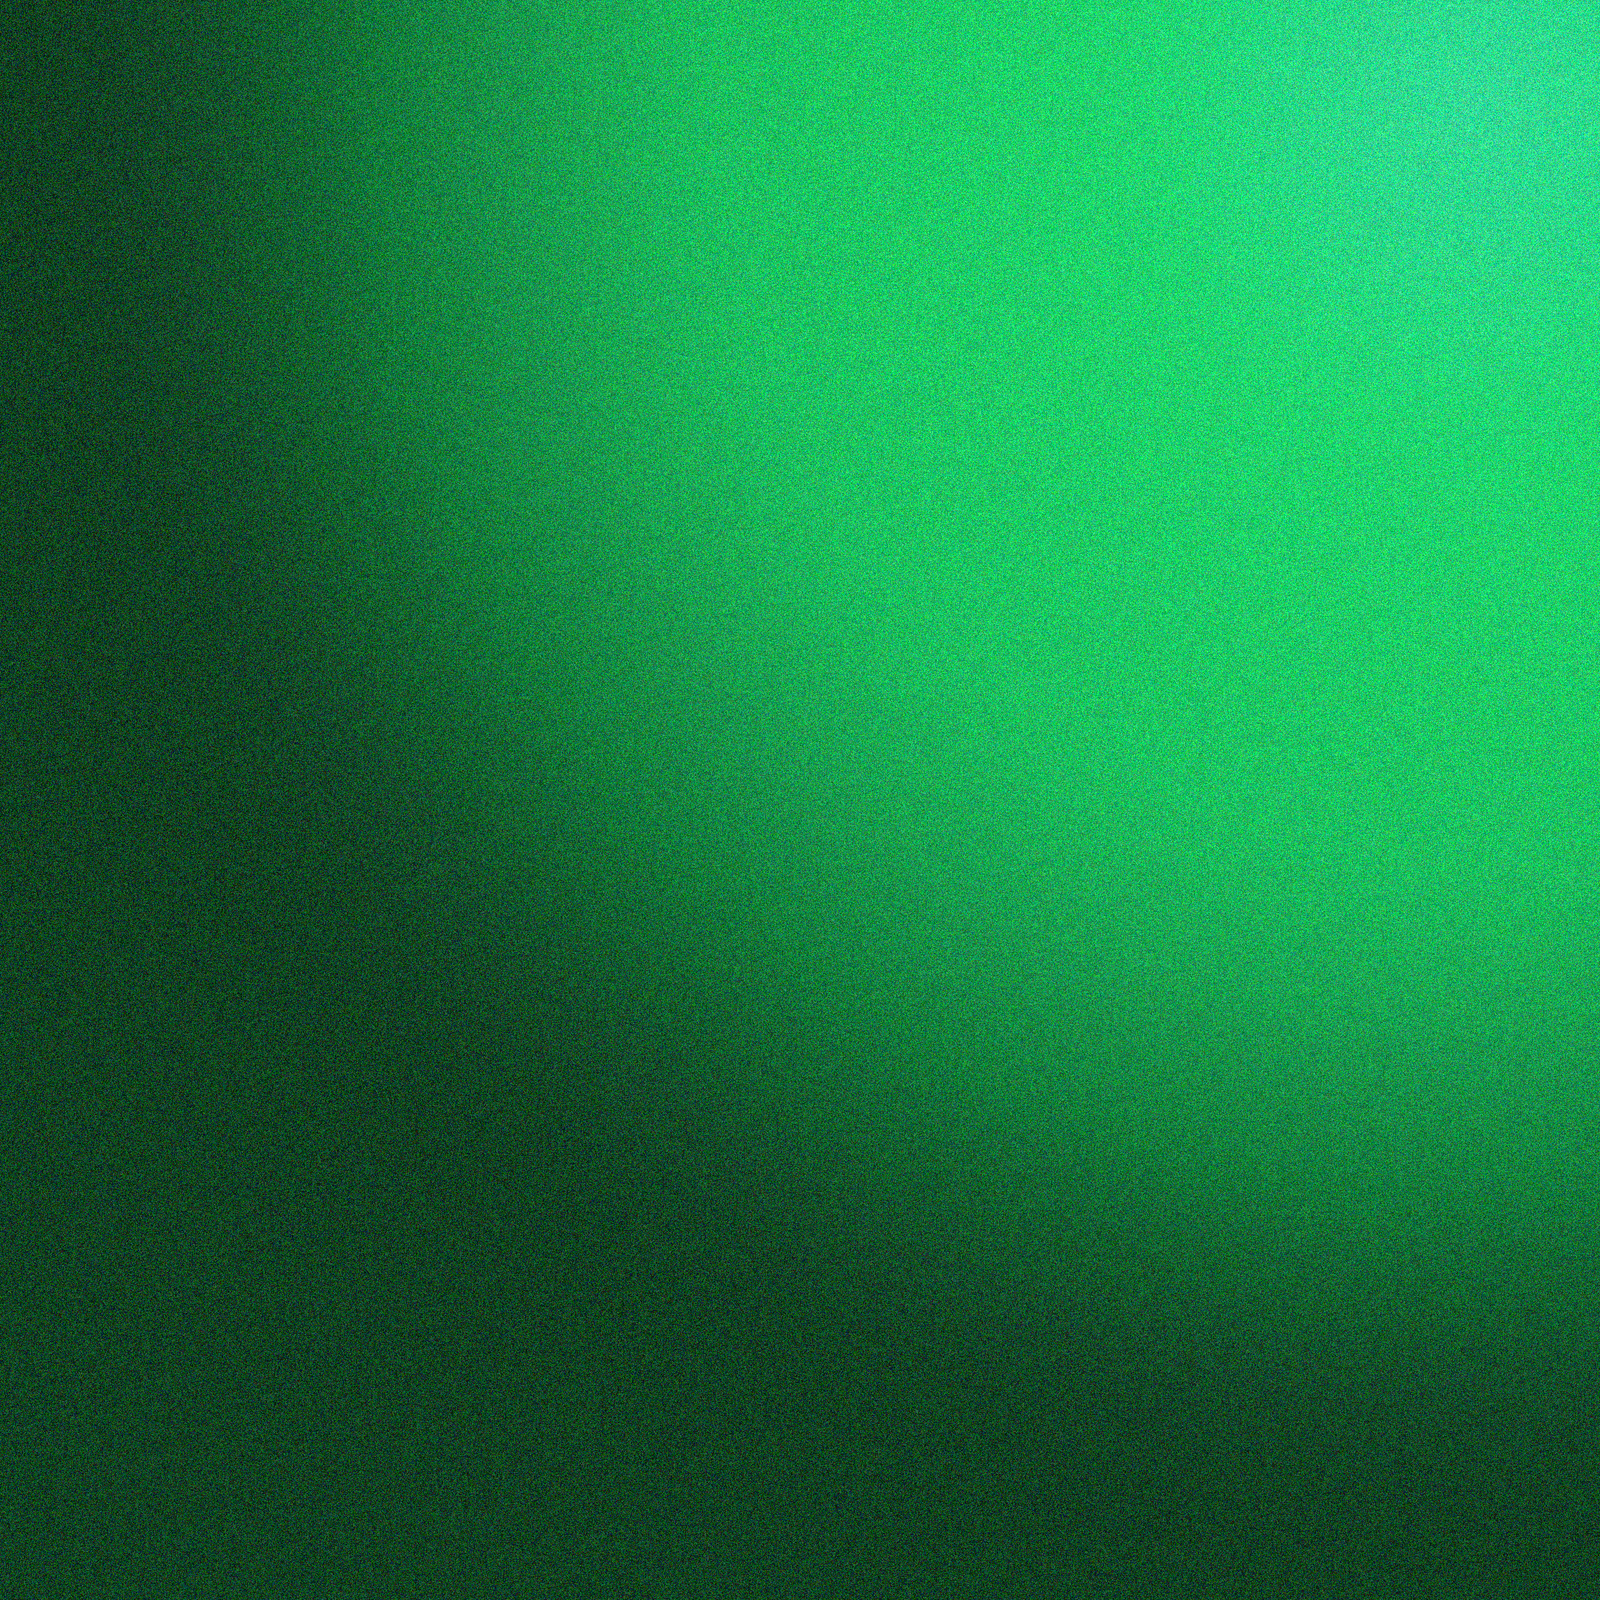 Background grain green gradient